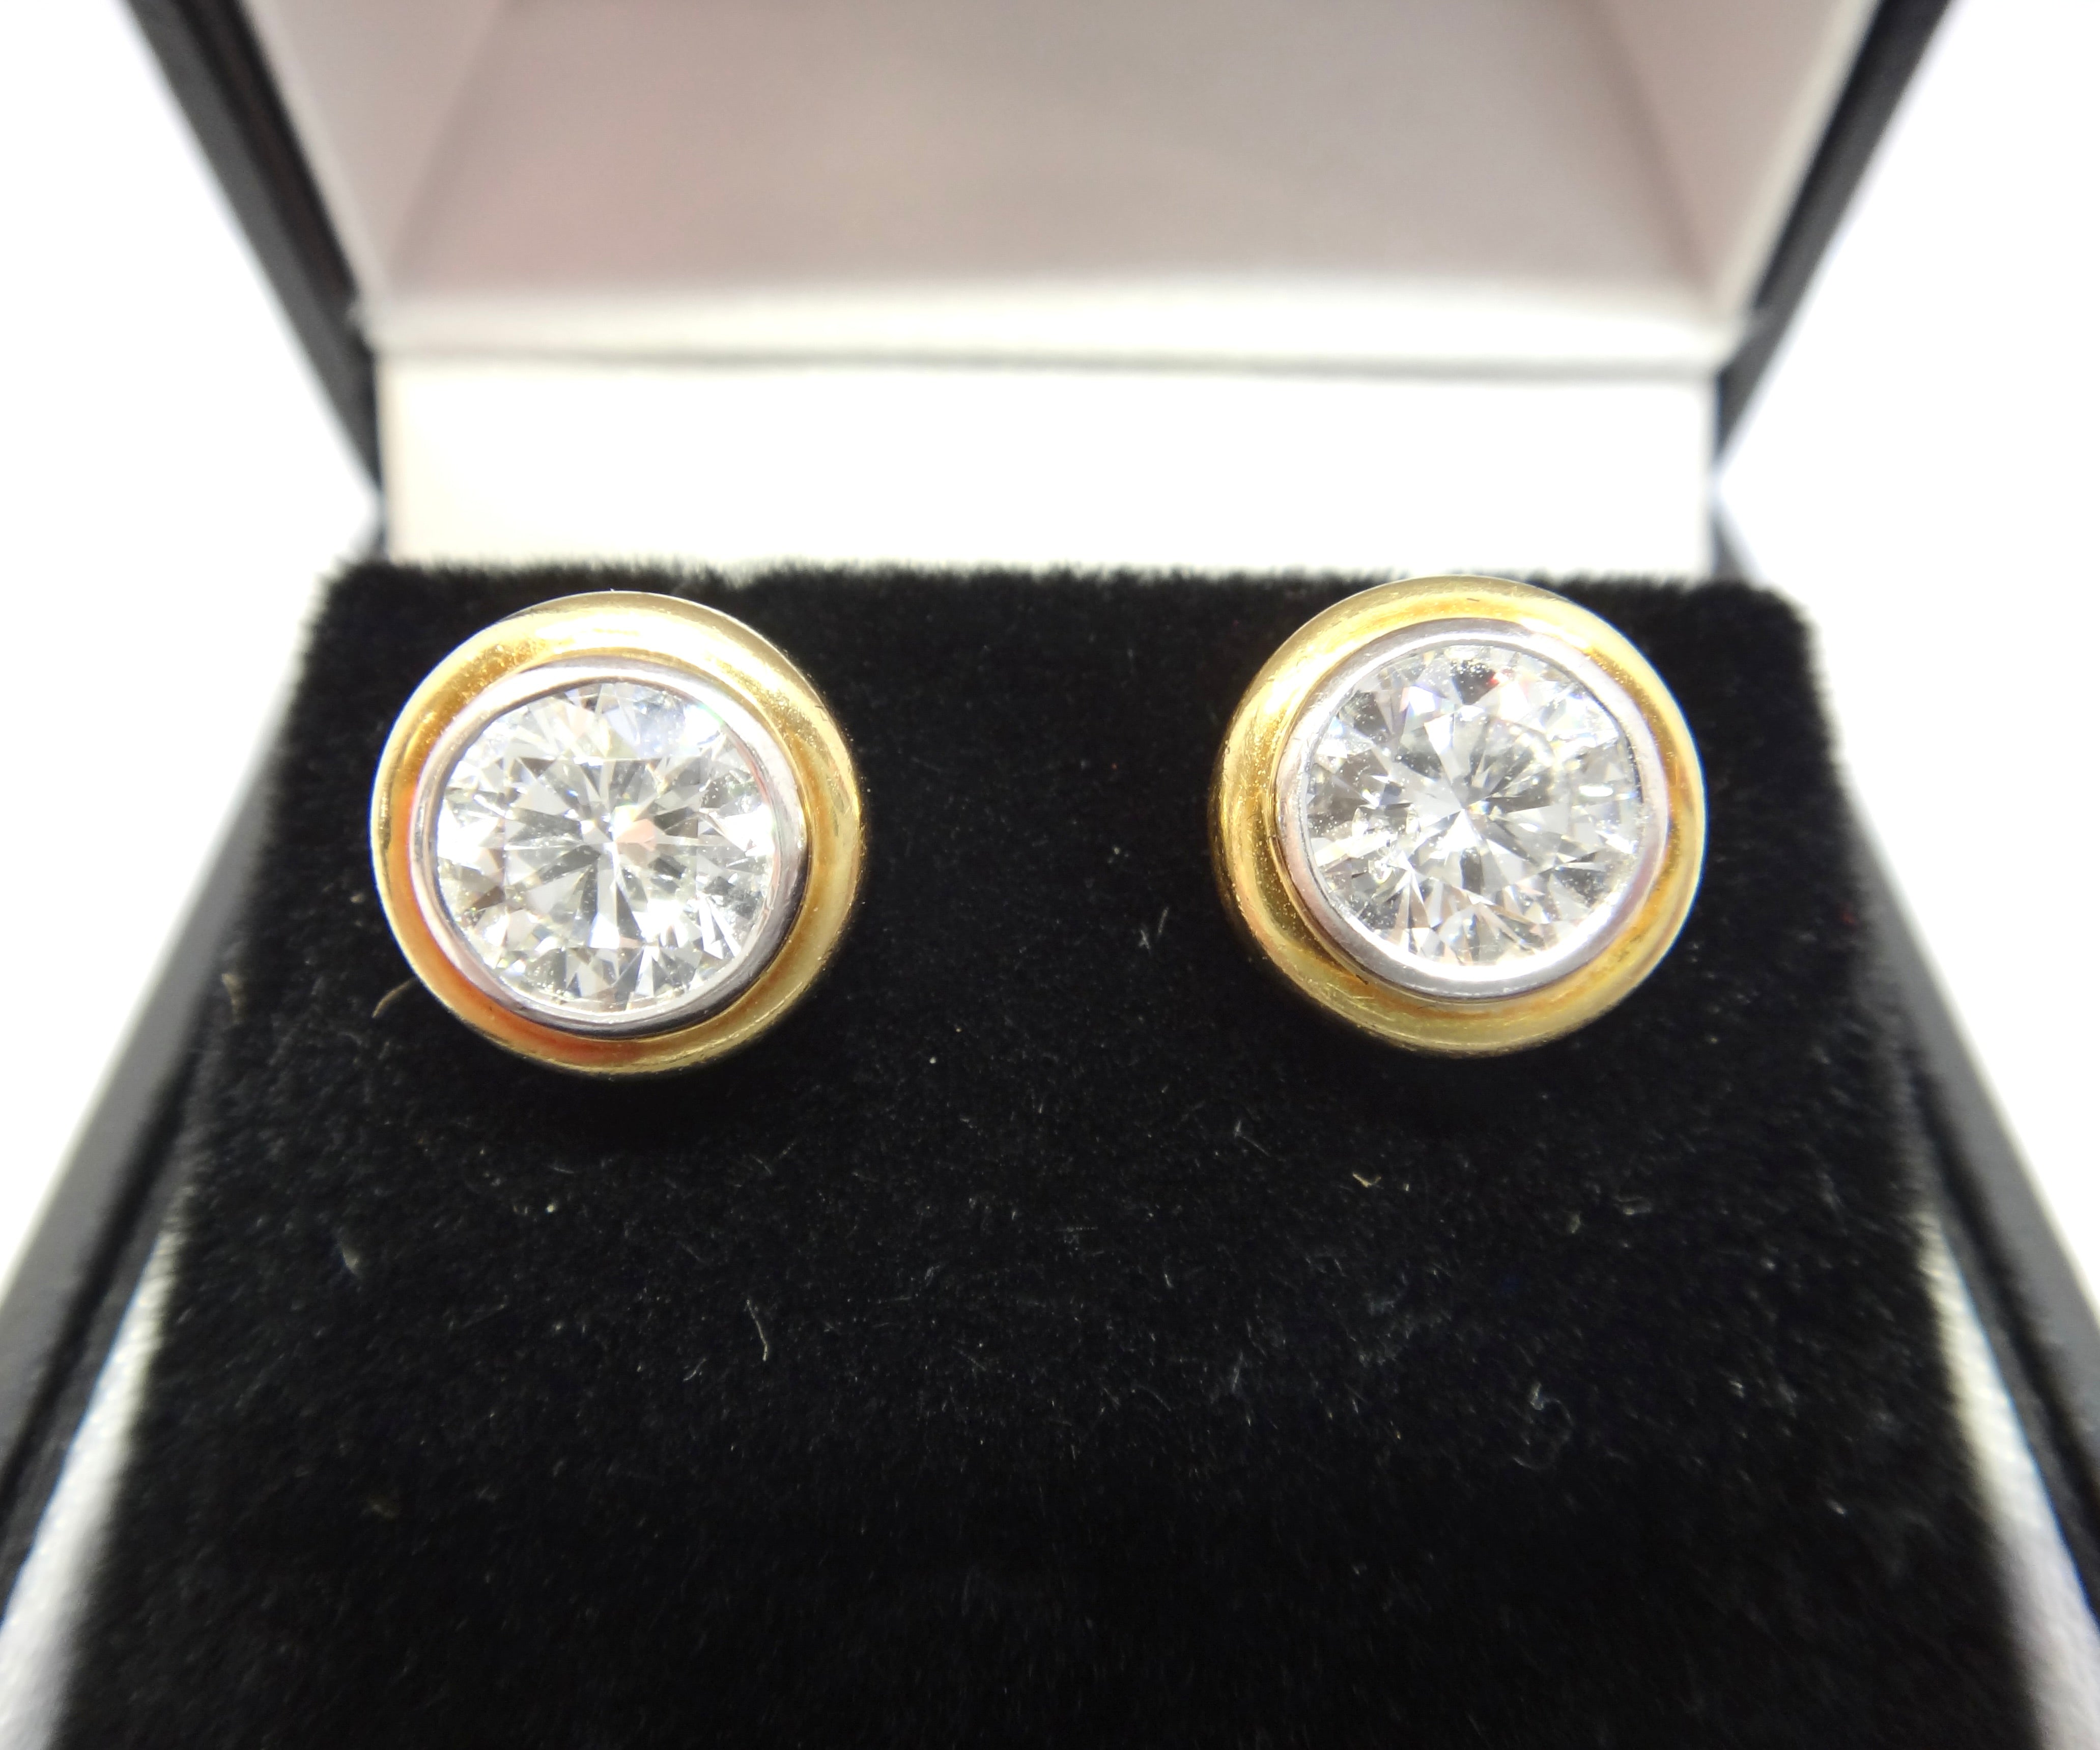 Handmade 18ct Gold & 1 Carat Diamond Stud Earrings VAL $32,300